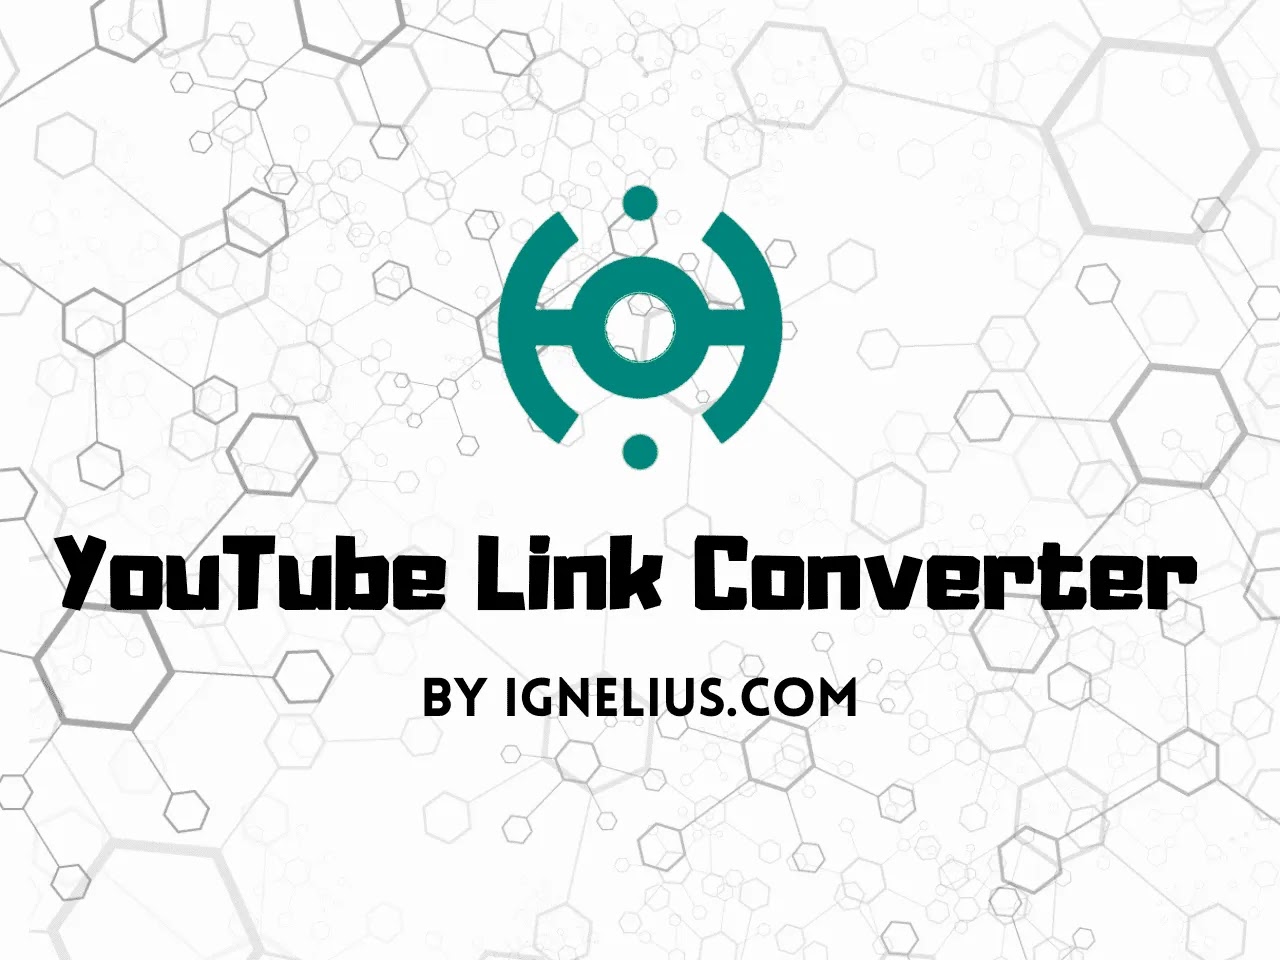 YouTube Link Generator